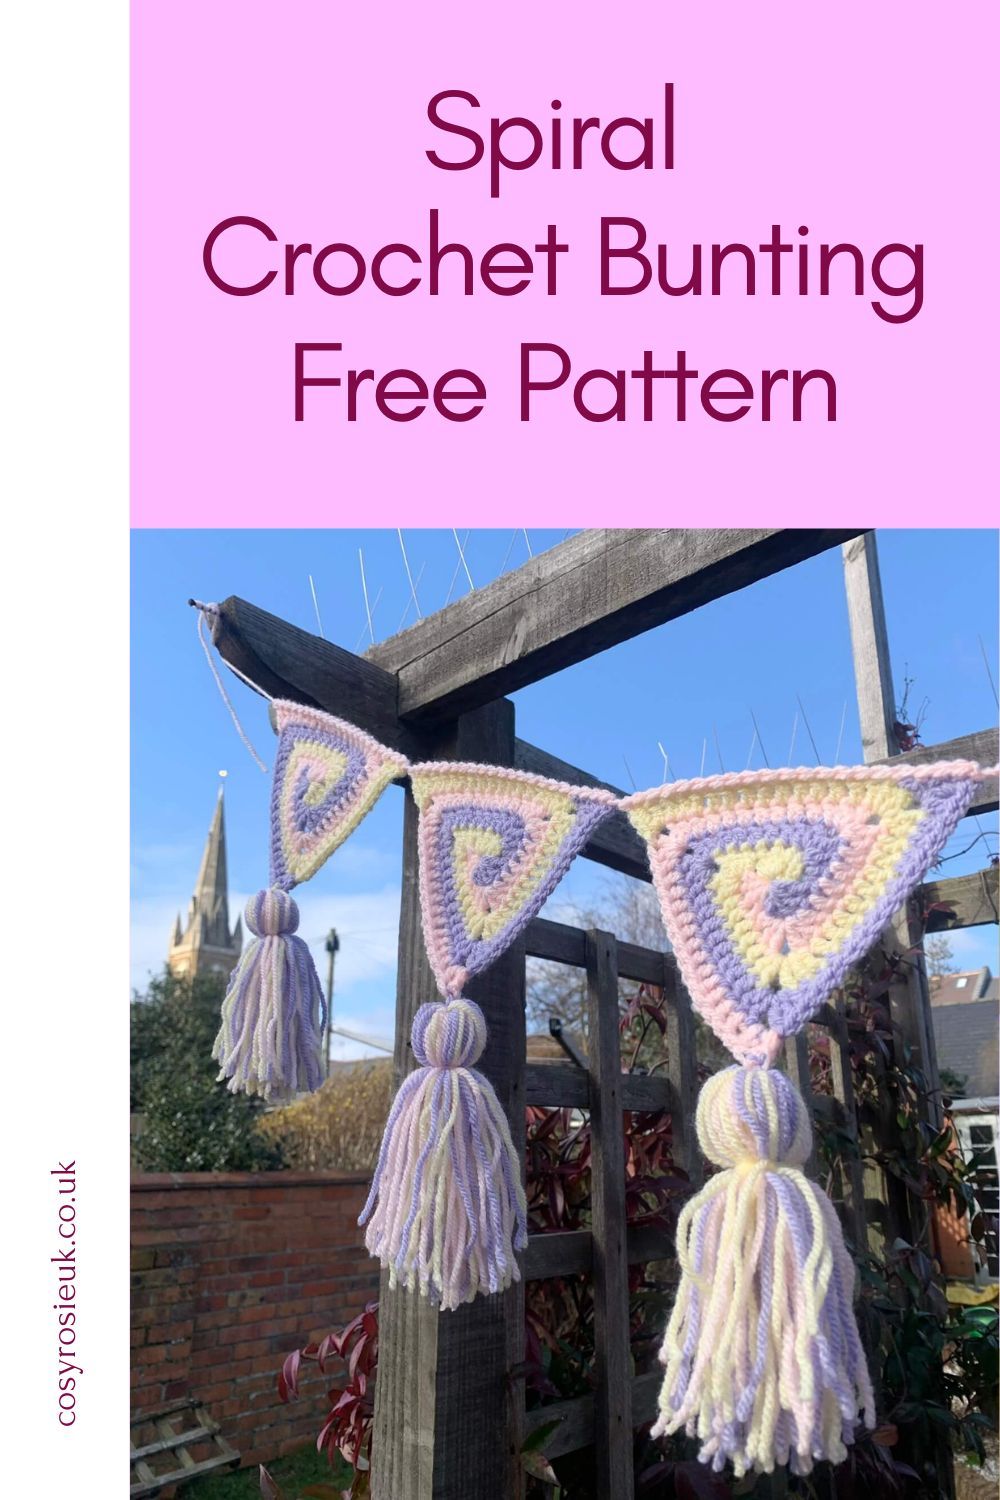 Spiral Crochet Bunting Free Pattern